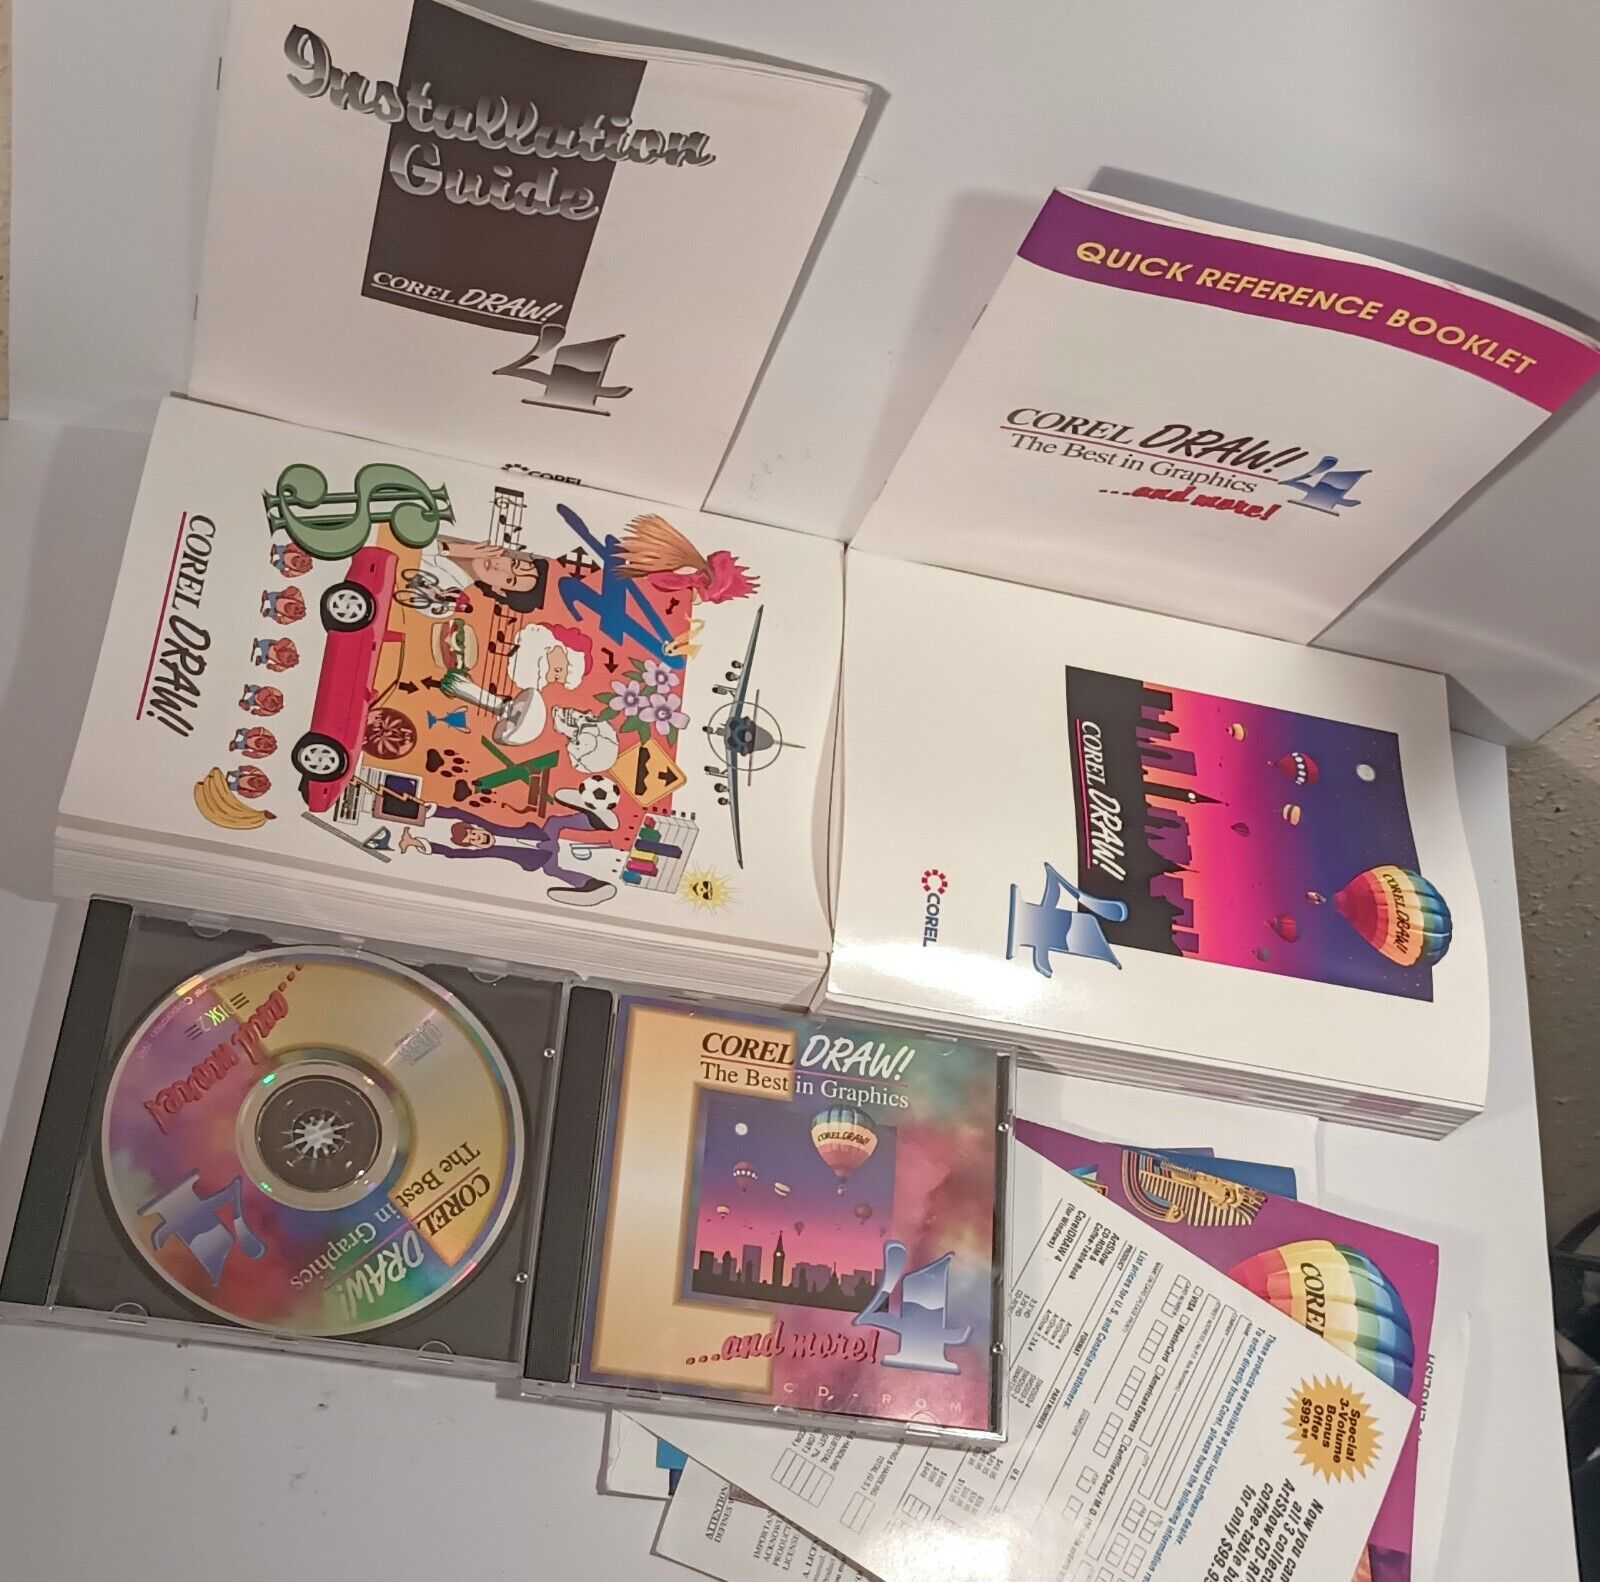 COREL DRAW 4 CD-Rom -  PC Graphics Software 